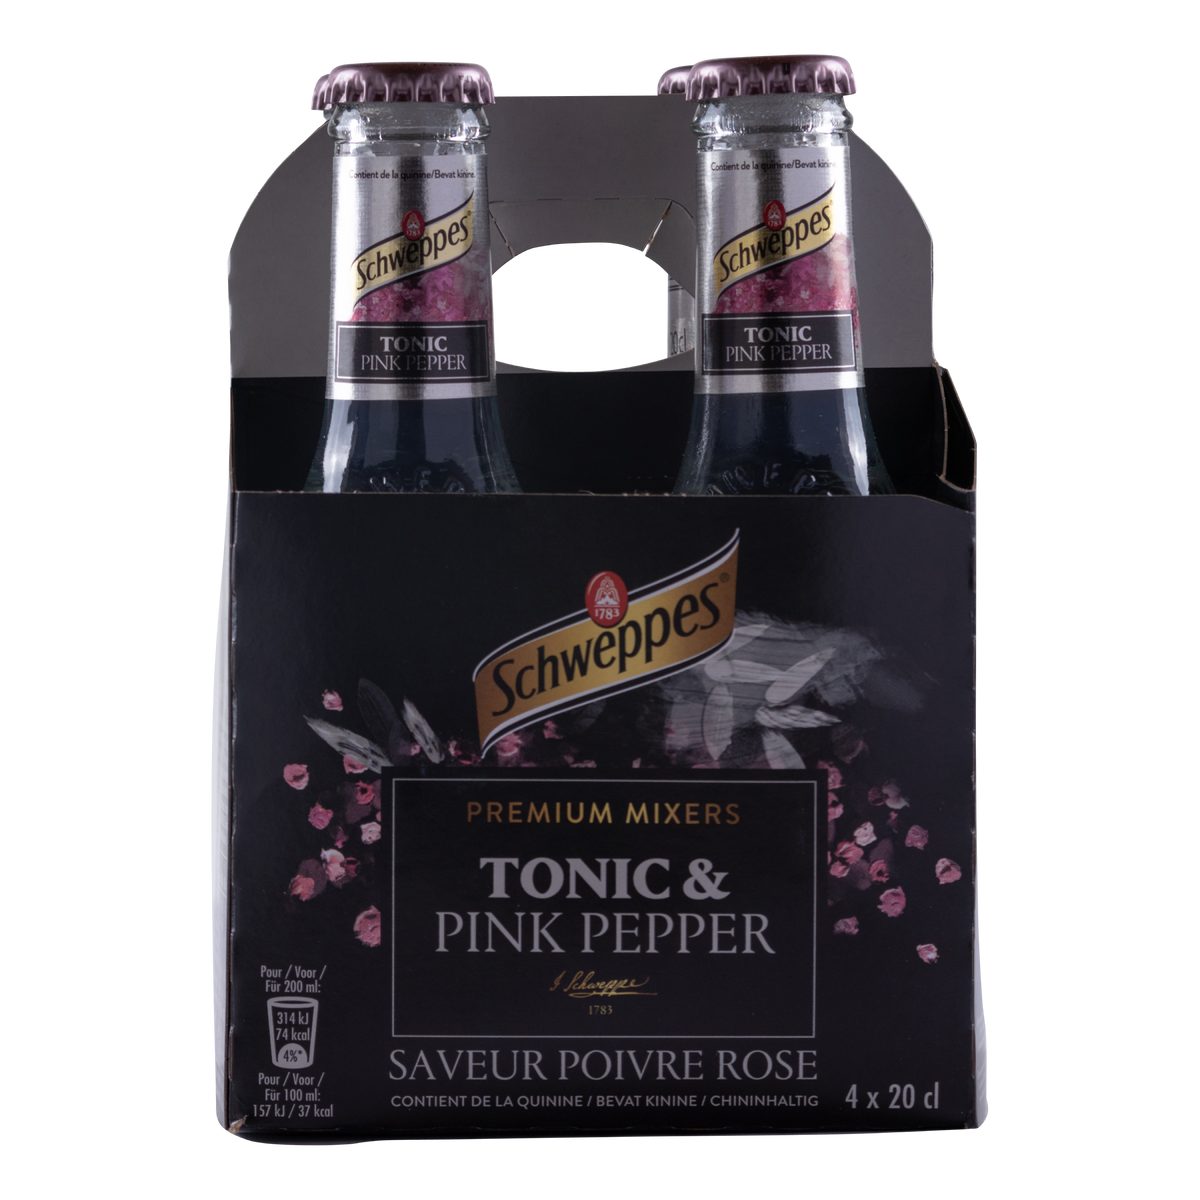 Egmonts garden gin schweppes tonic pink pepper water roze peper tonic premium mixer